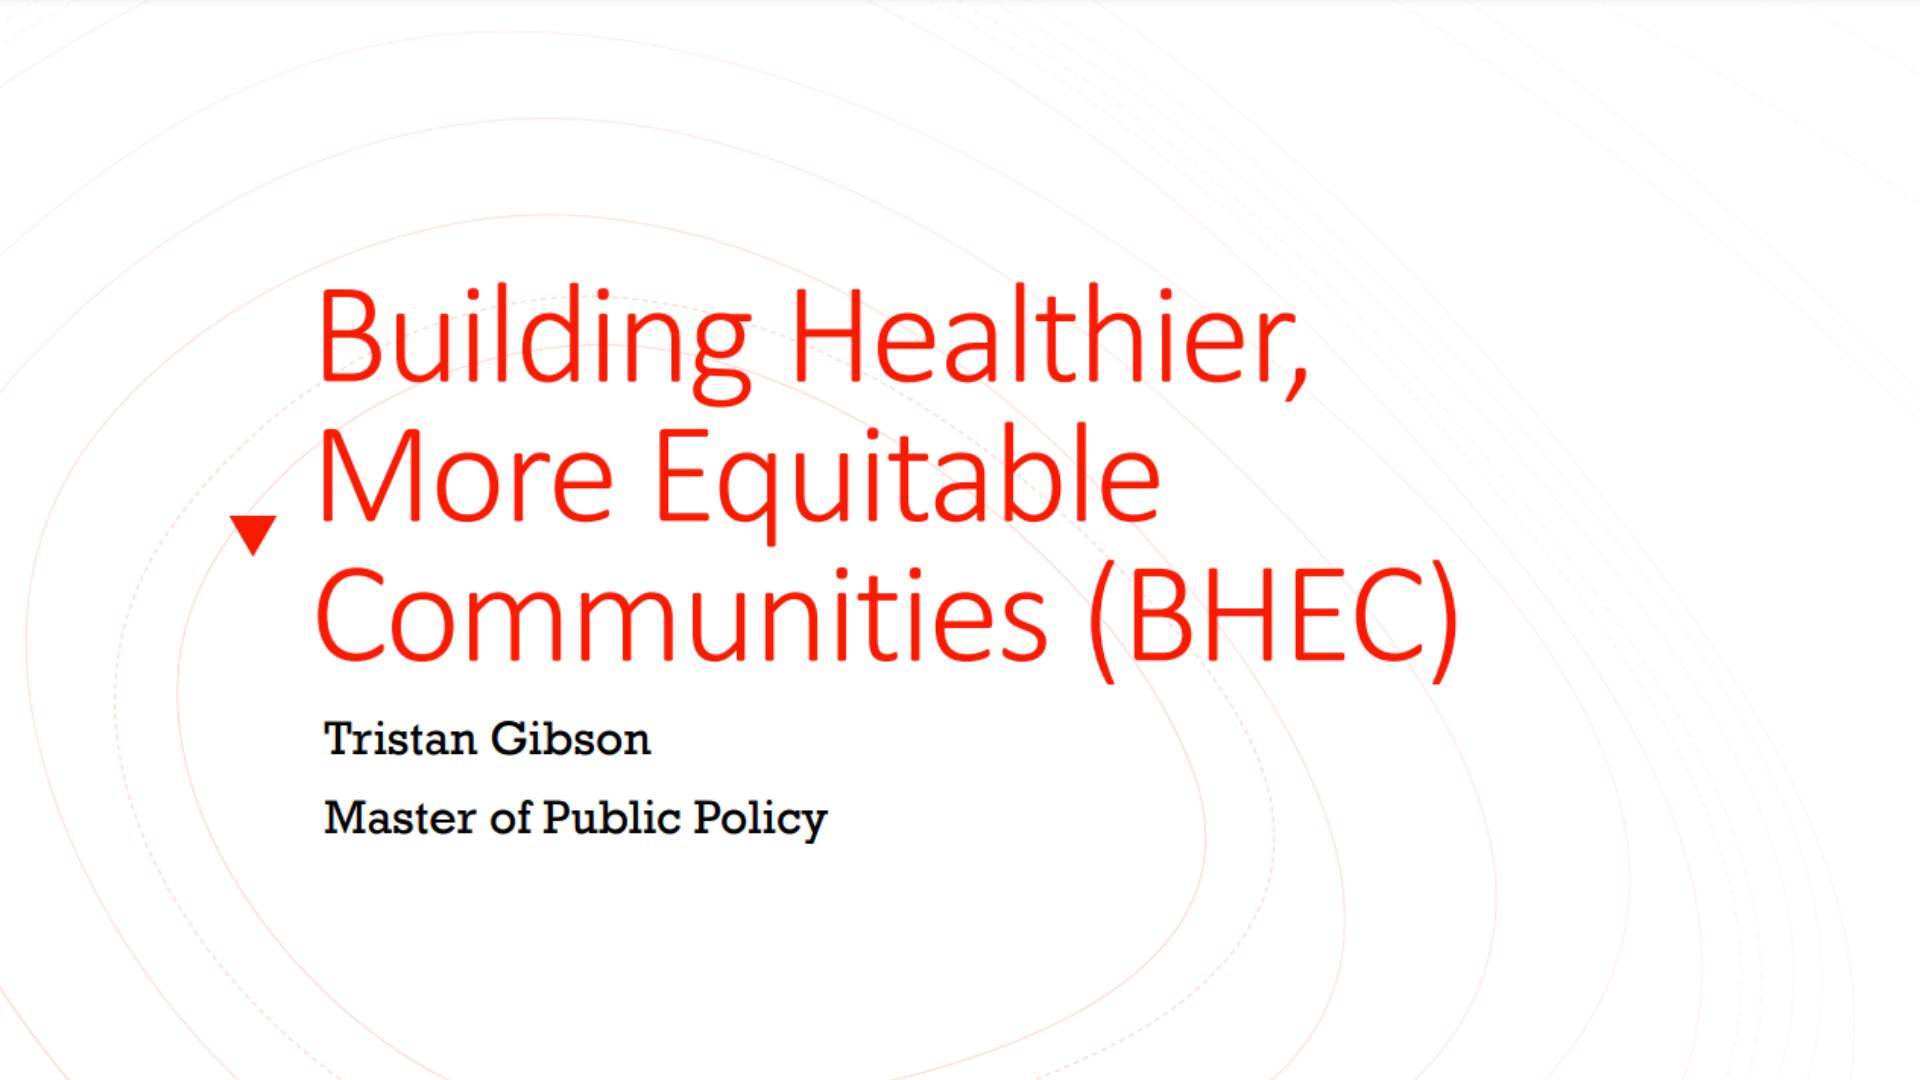 Building Healthier, More Equitable Communities